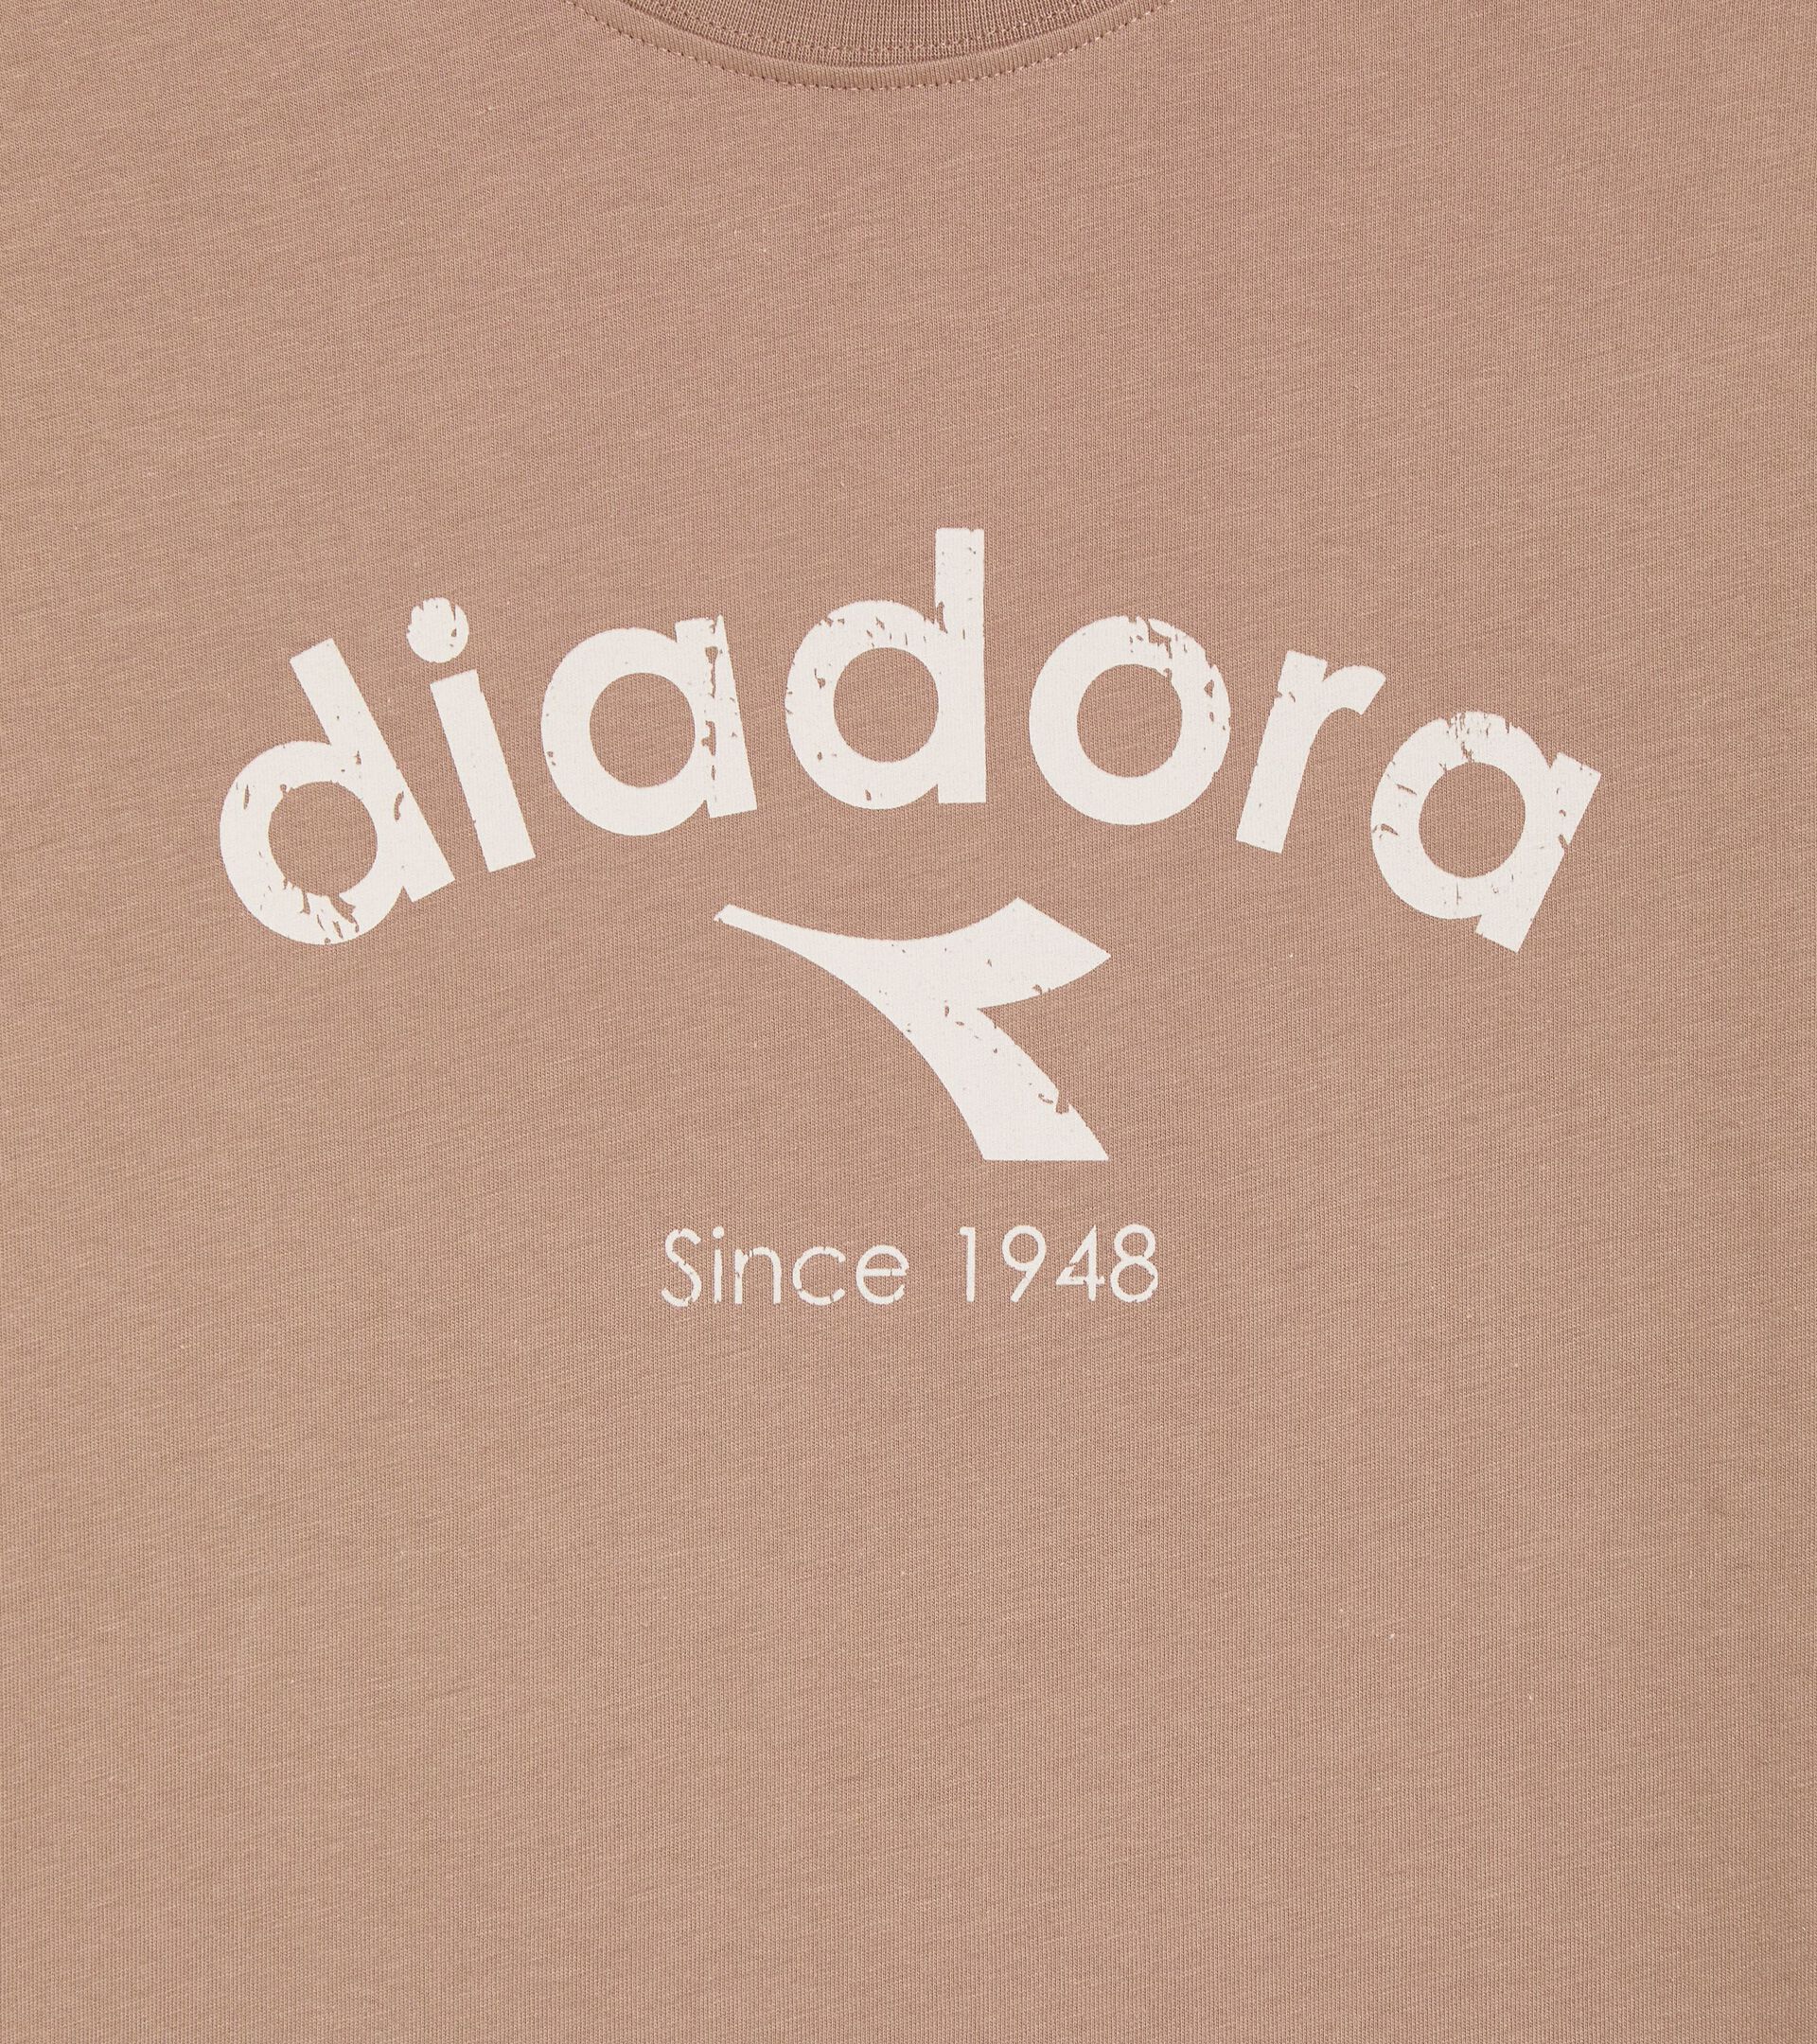 T-shirt - Gender Neutral T-SHIRT SS ATHL. LOGO MARRONE NOCCIOLA CHIARO - Diadora